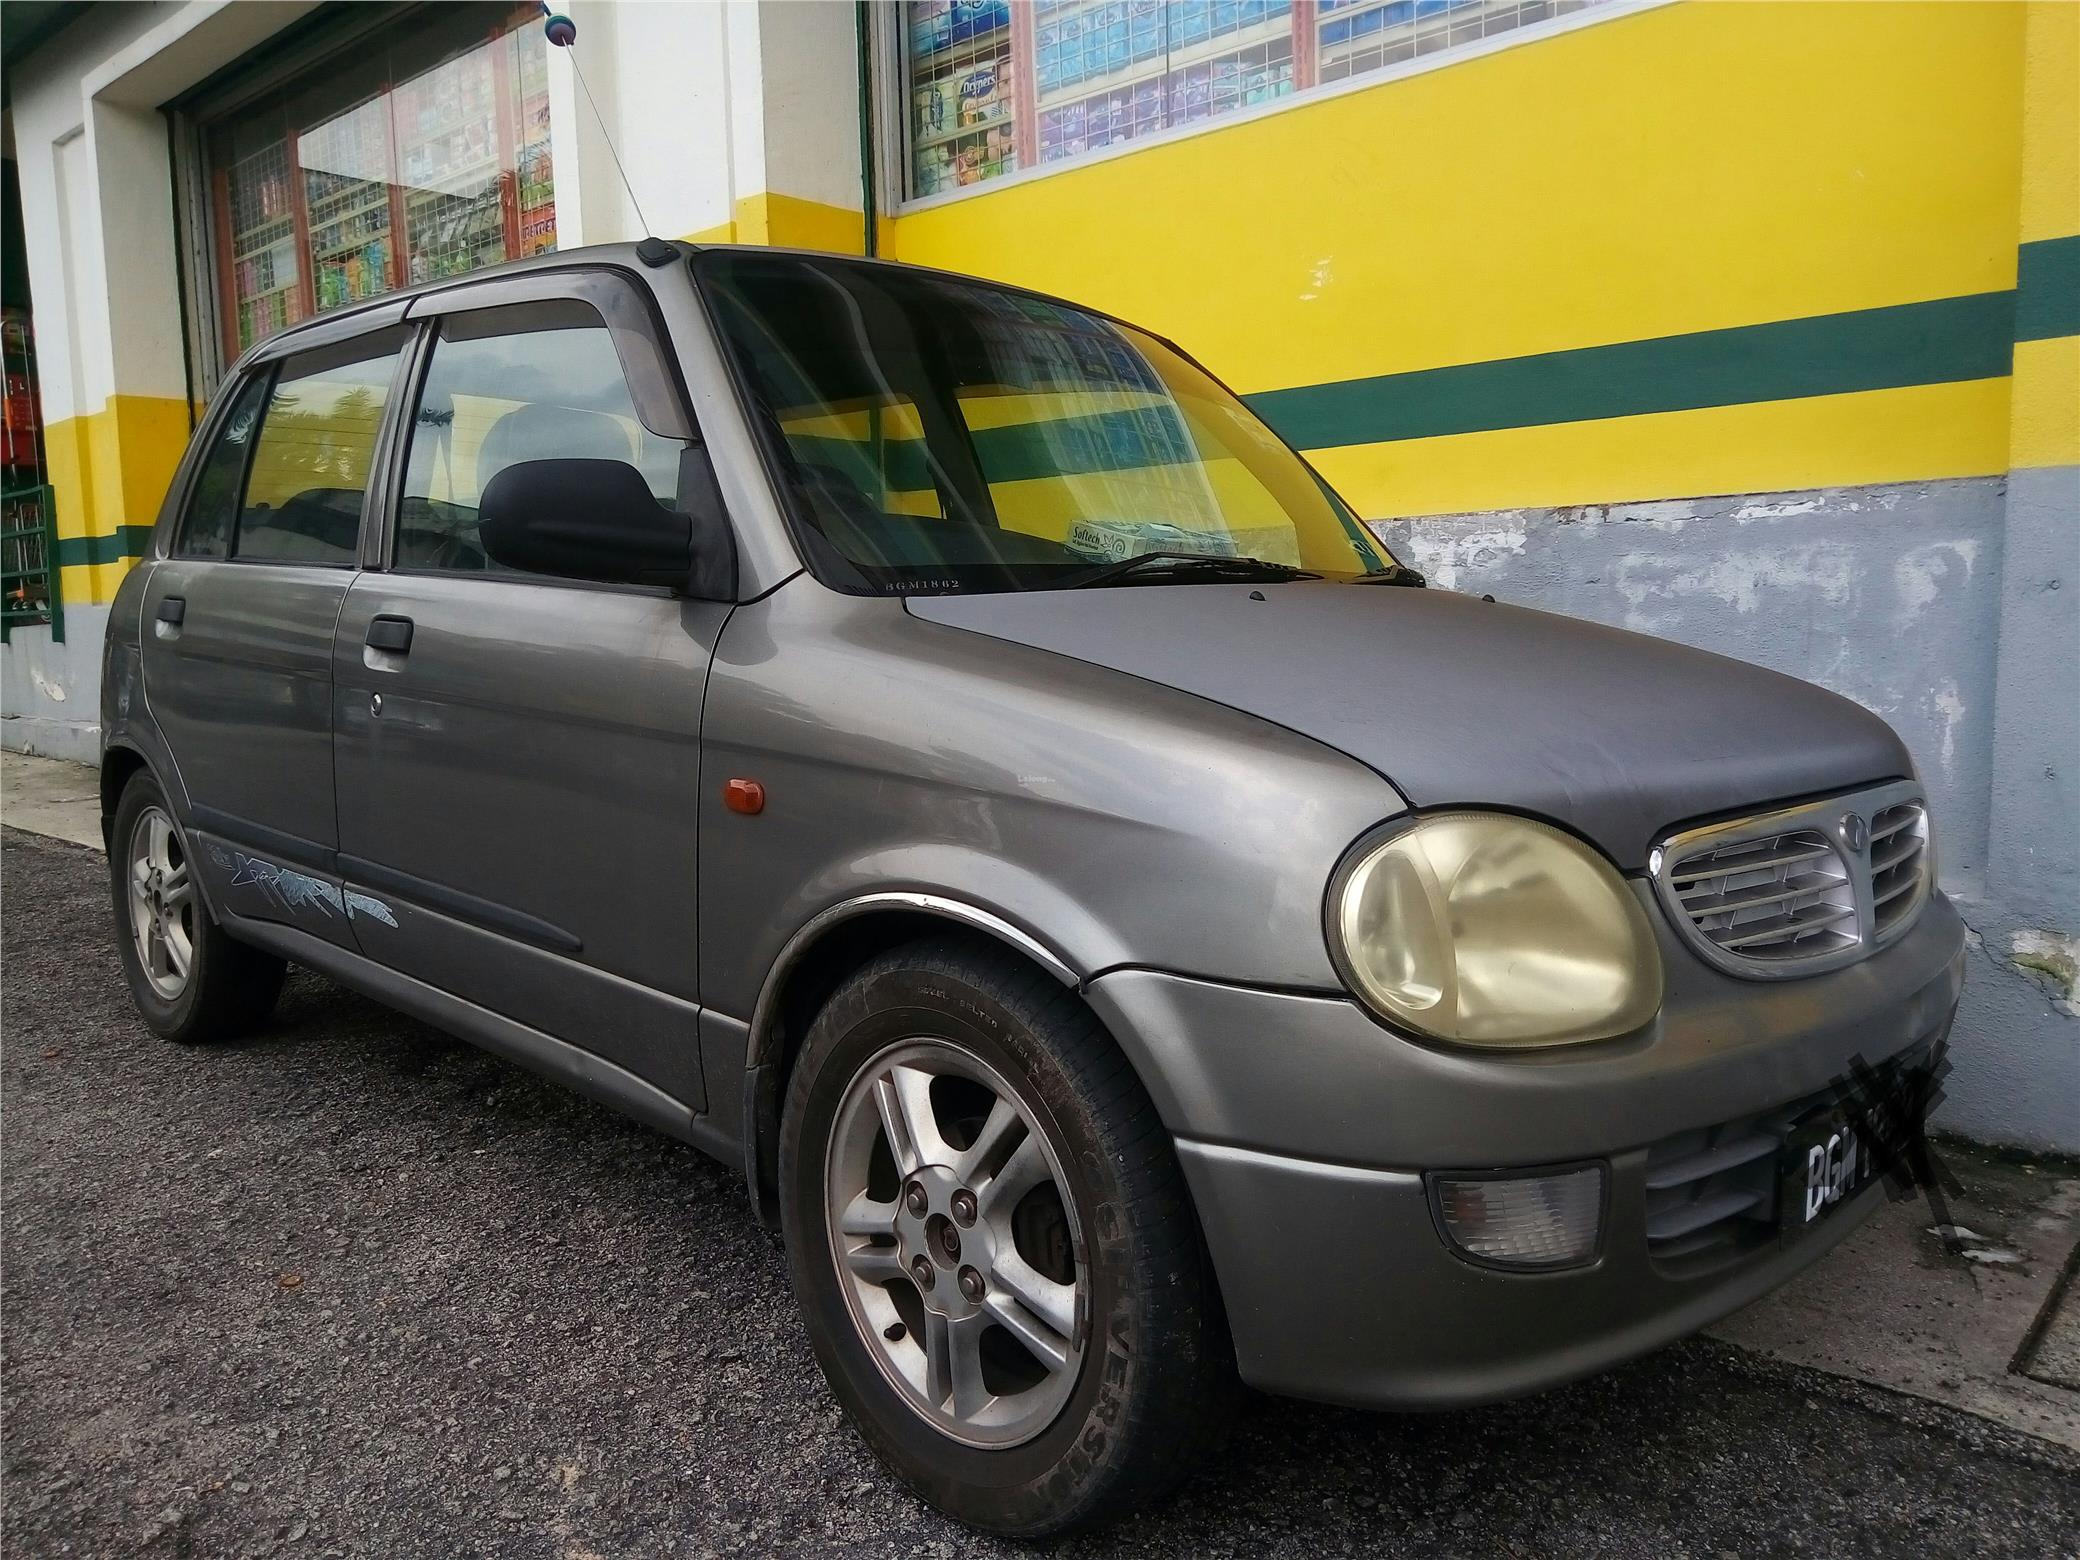 2002 Perodua Kelisa gx 1.0 (m) for sa (end 1/2/2017 3:15 PM)